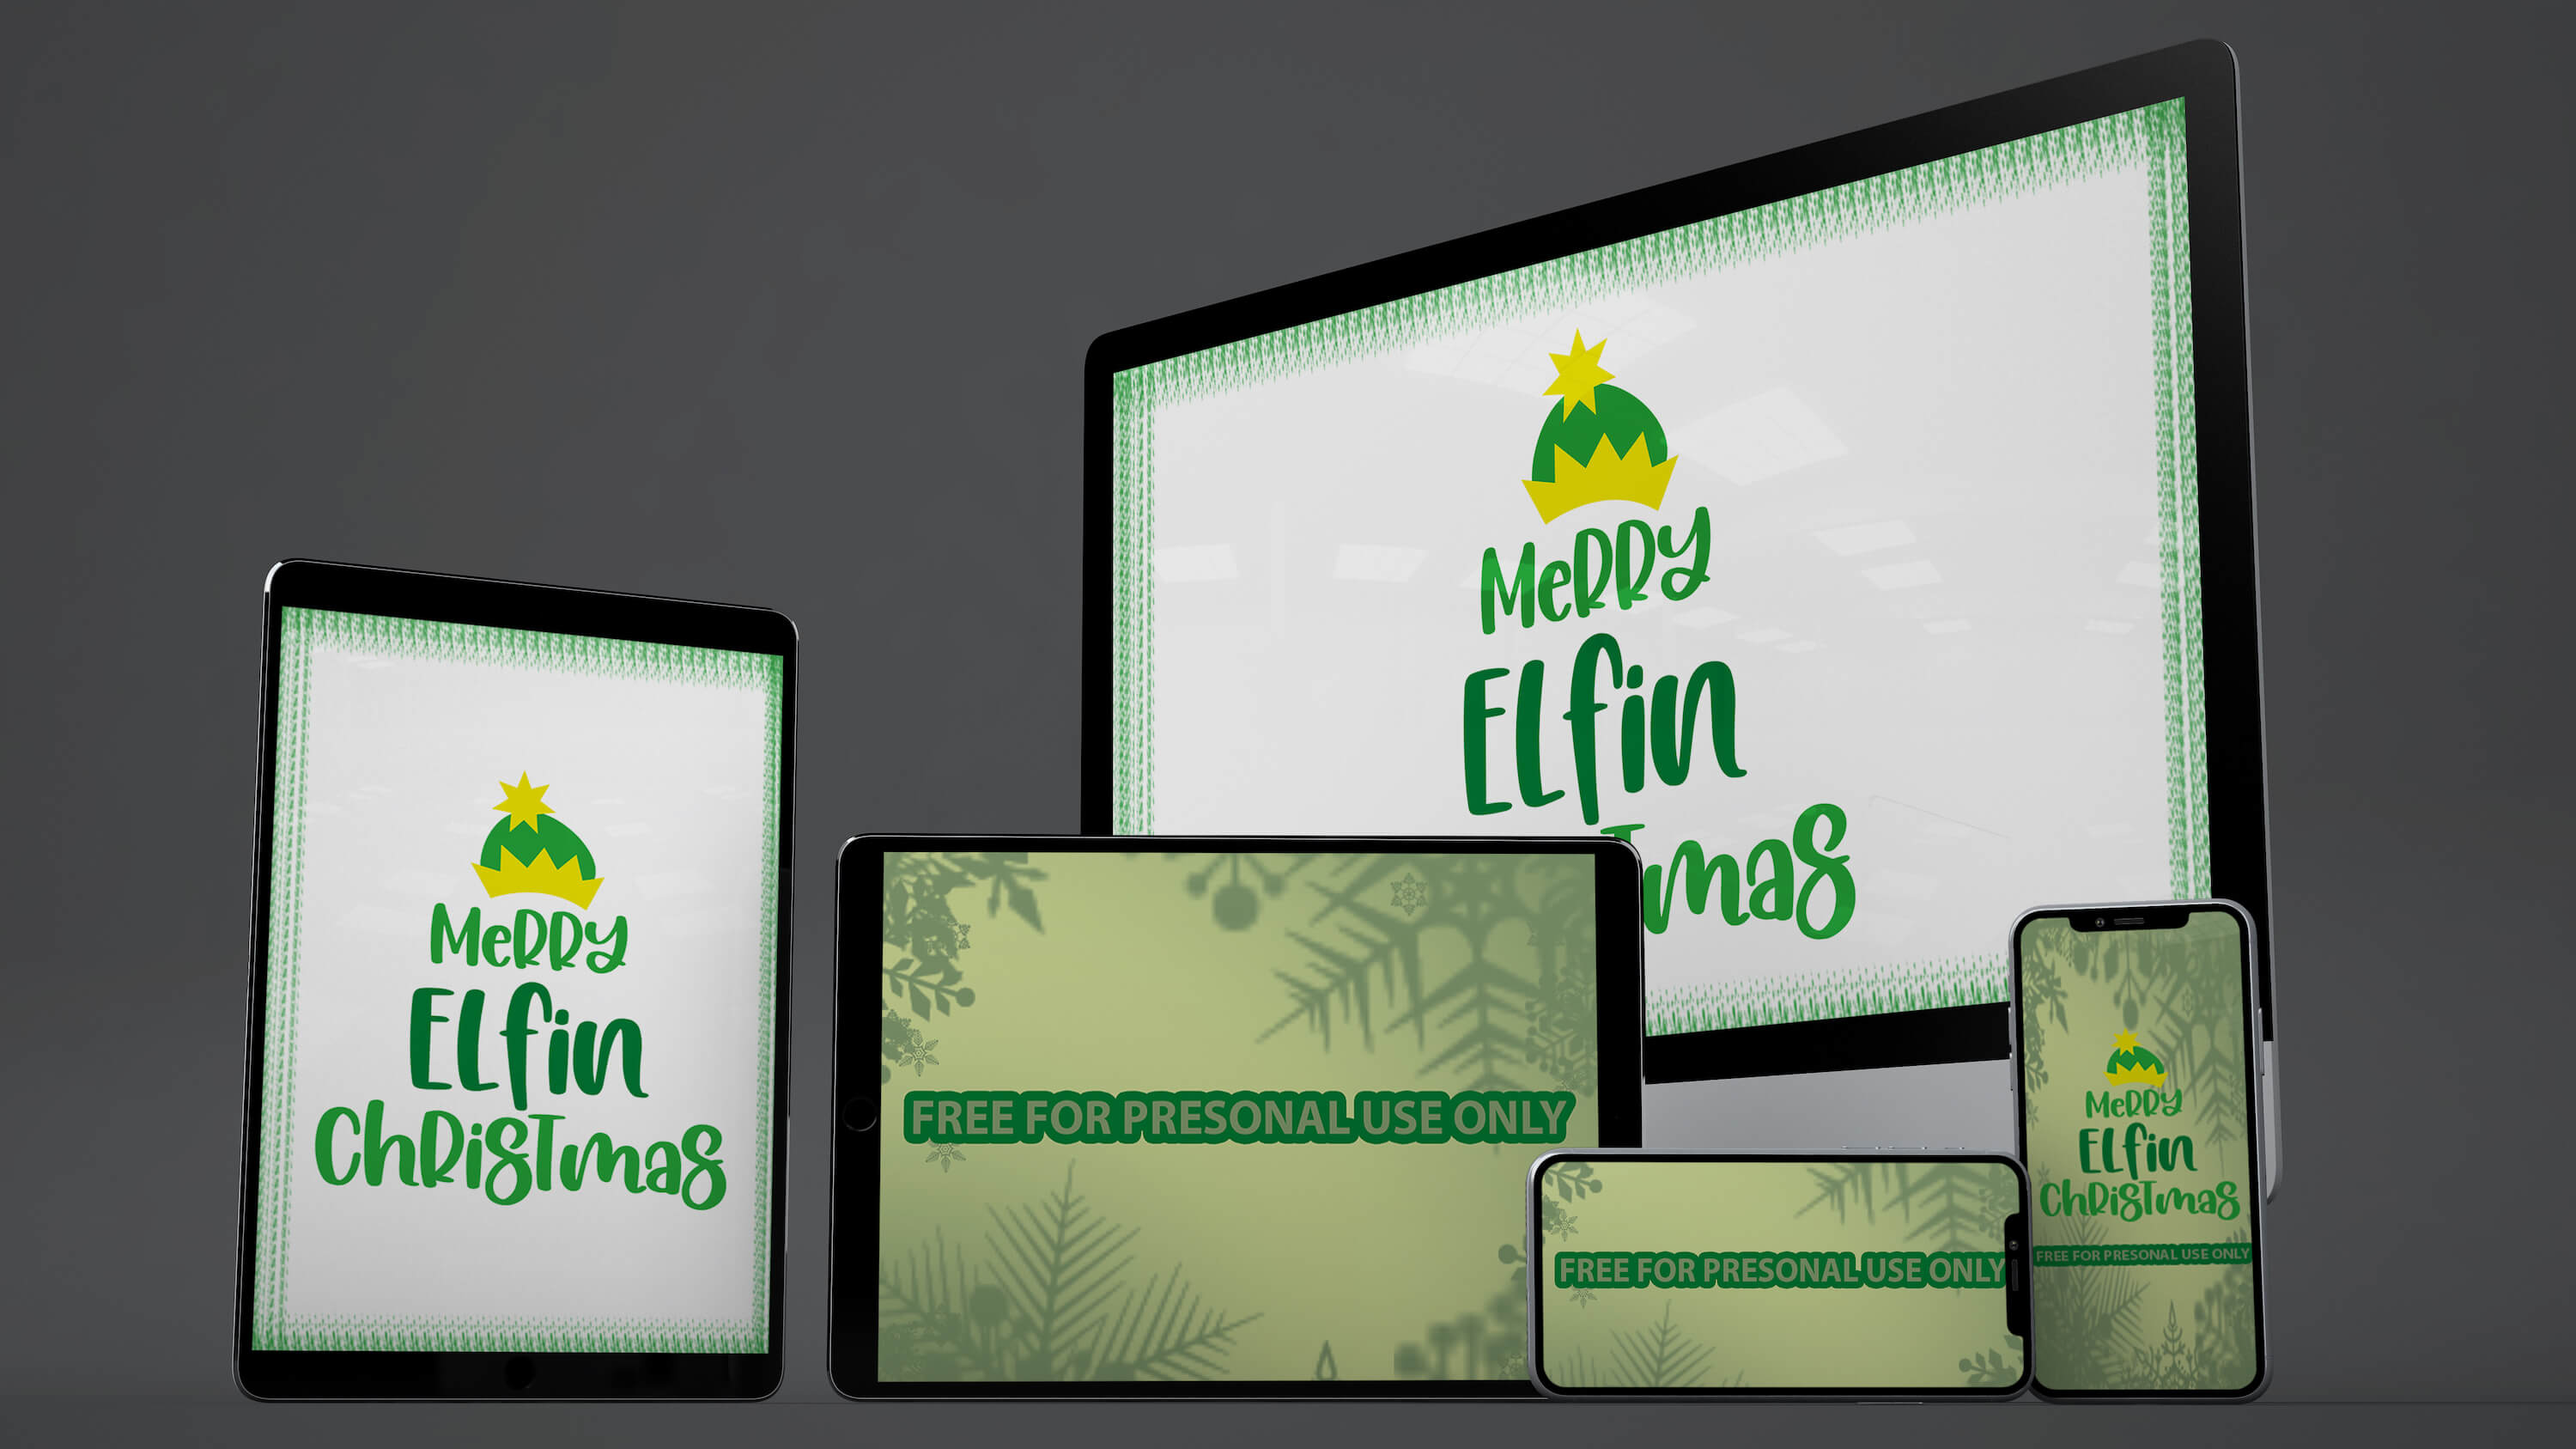 Merry elfin Christmas free SVG files facebook image.